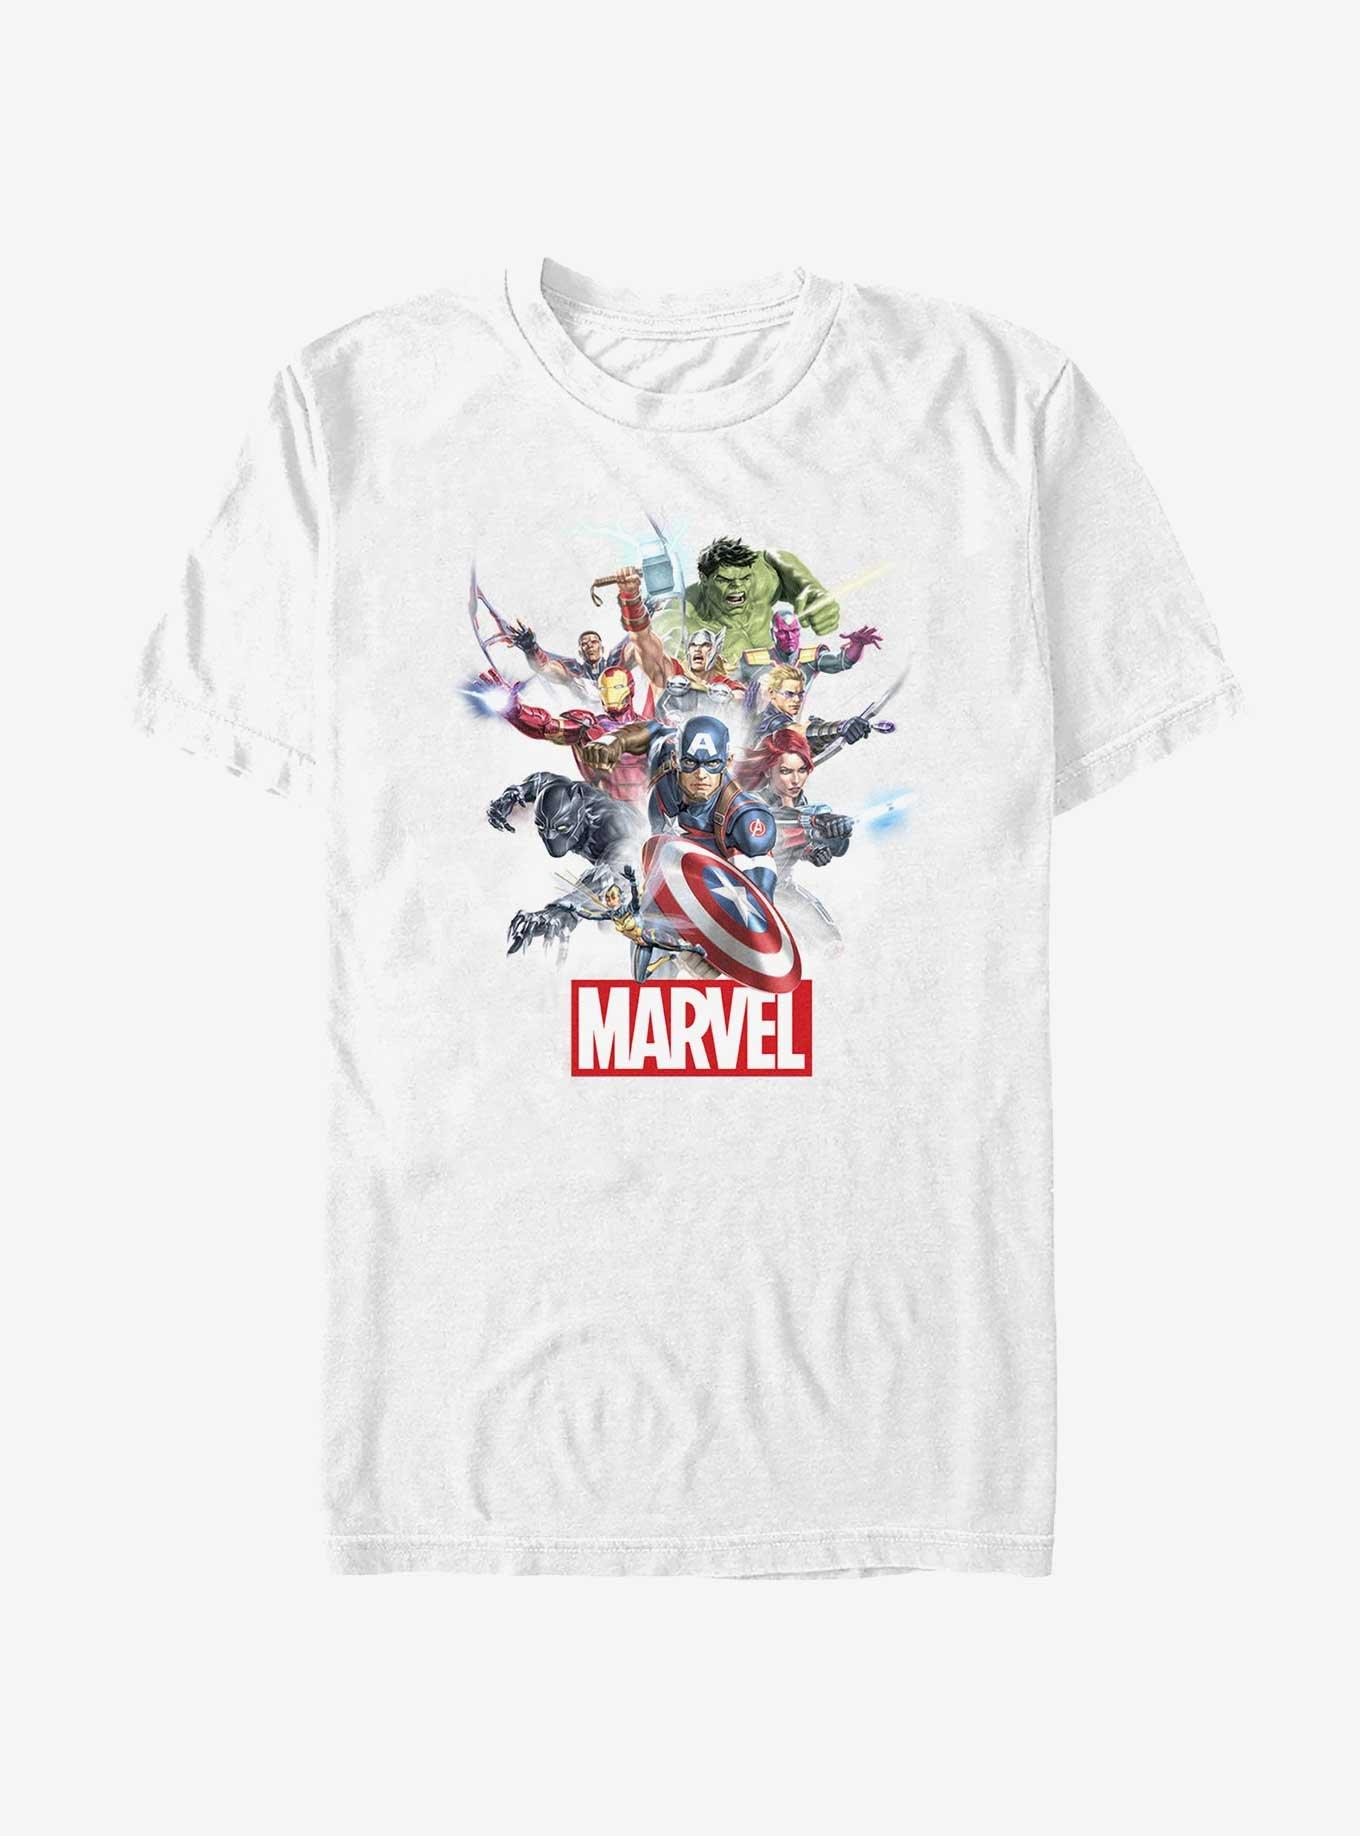 Marvel Avengers The Classic Group T-Shirt